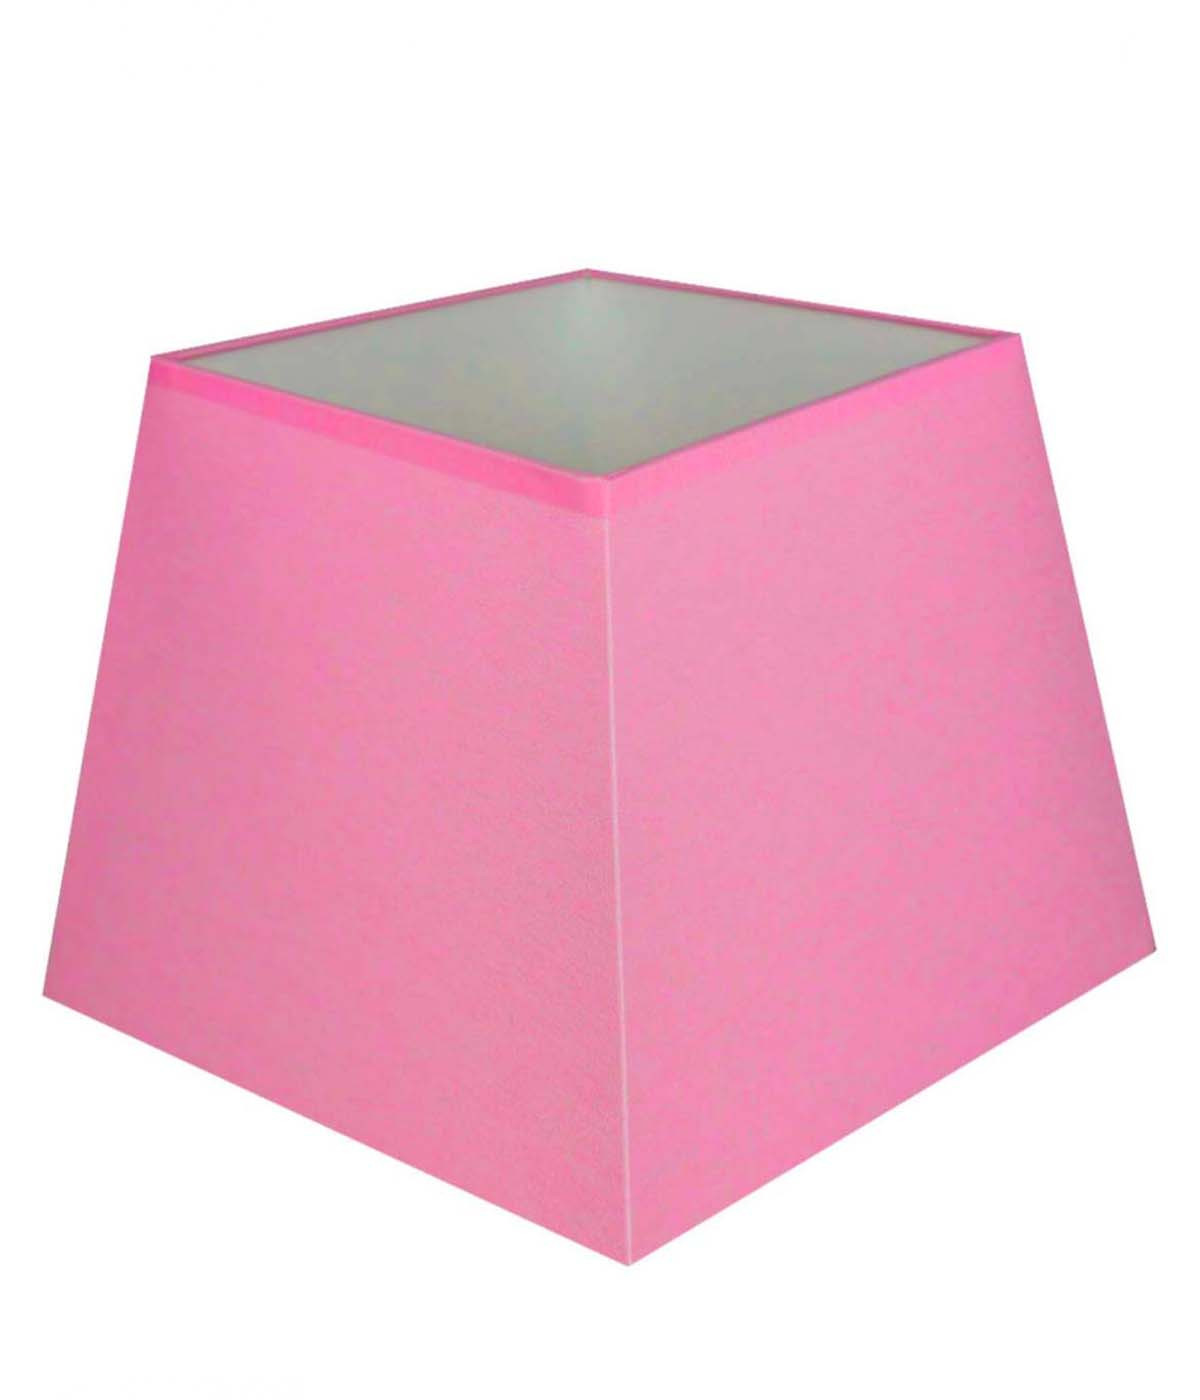 Paralume a piramide quadrata rosa